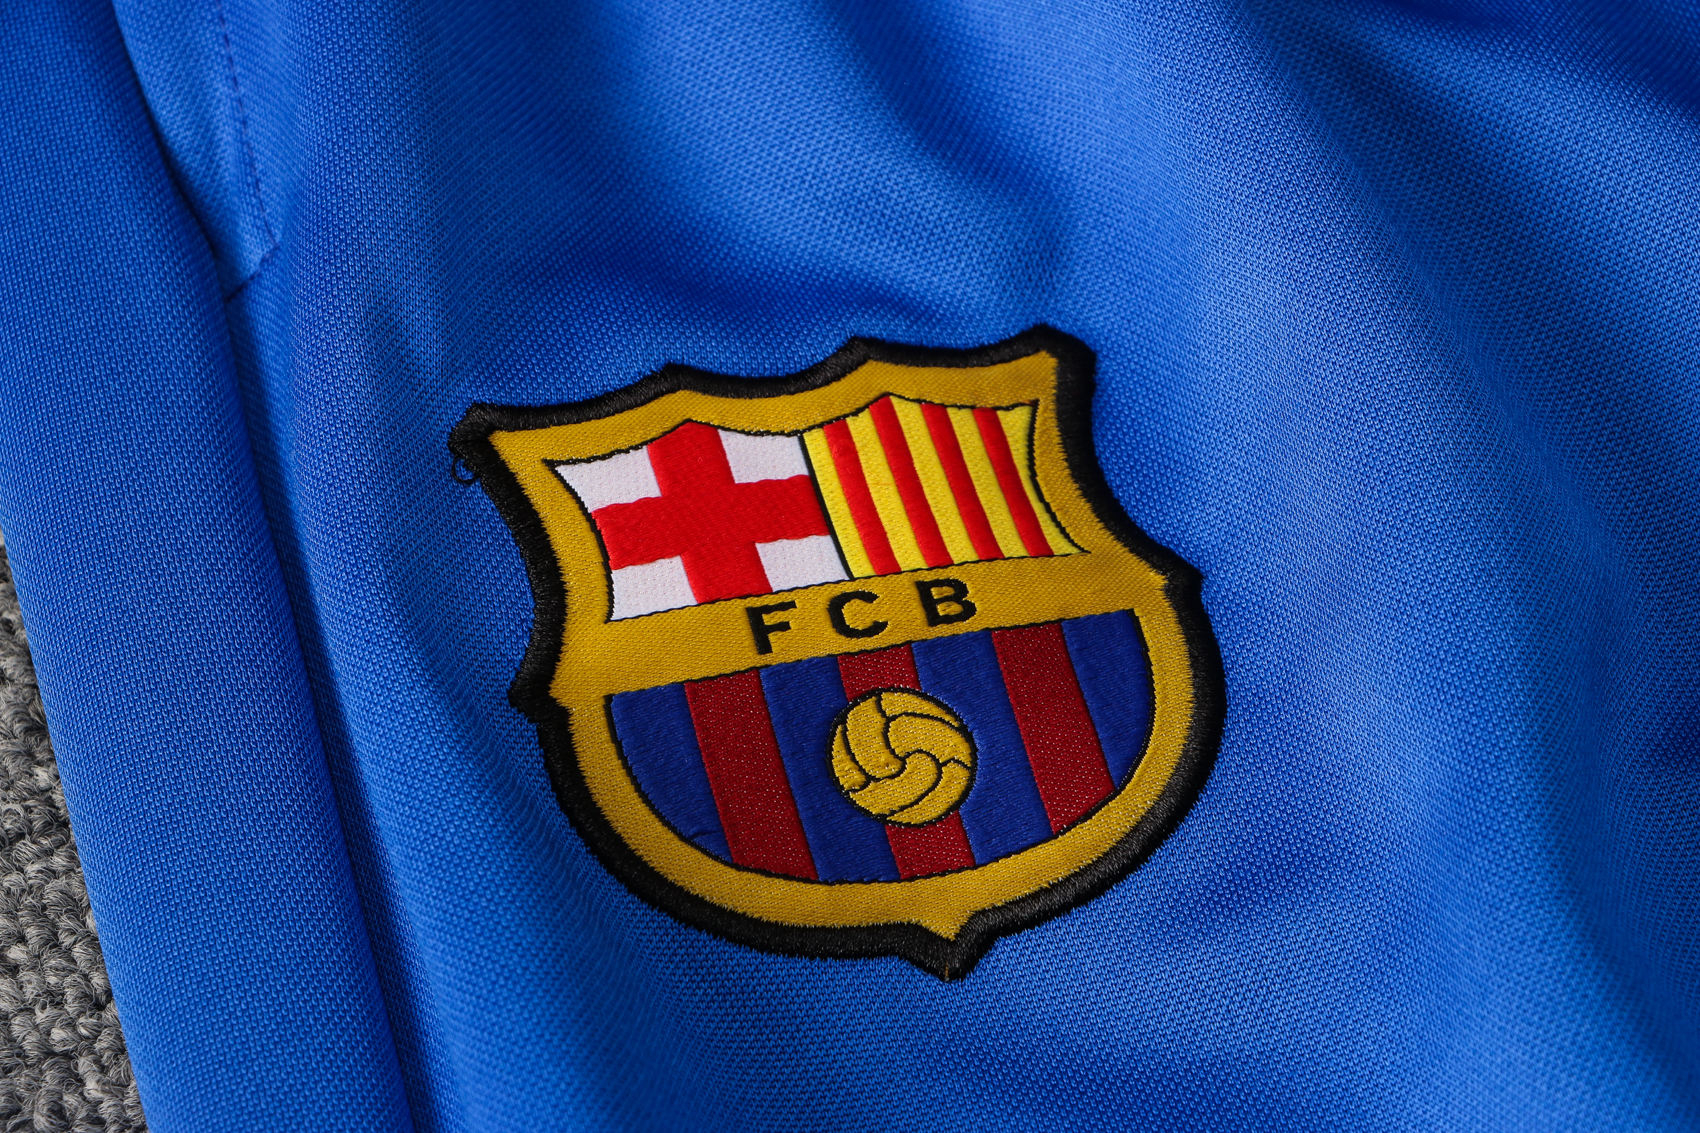 Barcelona Soccer Training Suit Jacket + Pants Maroon Mens 2021/22 